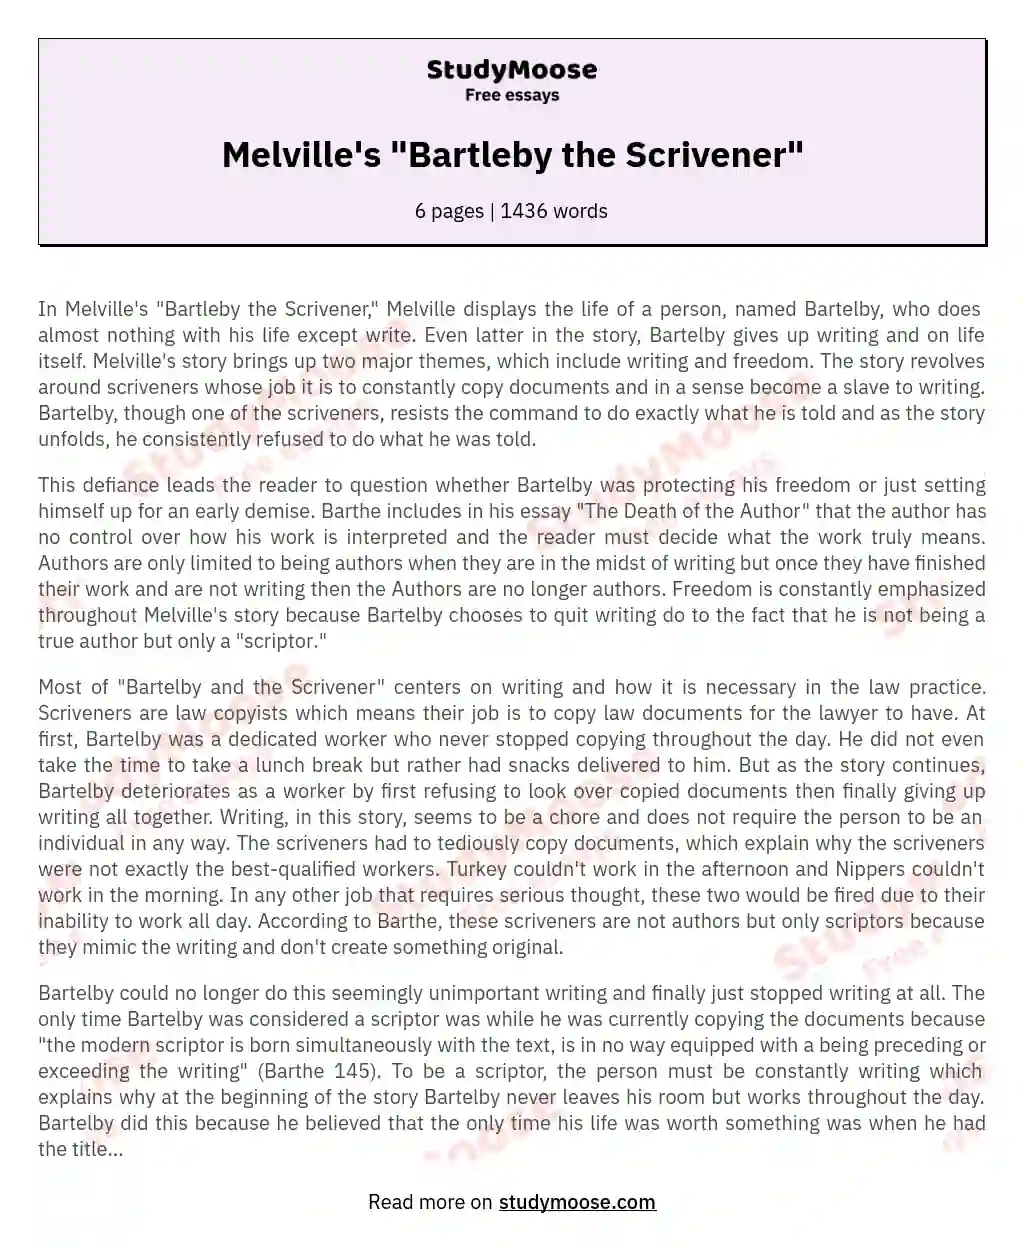 Melville's "Bartleby the Scrivener" essay